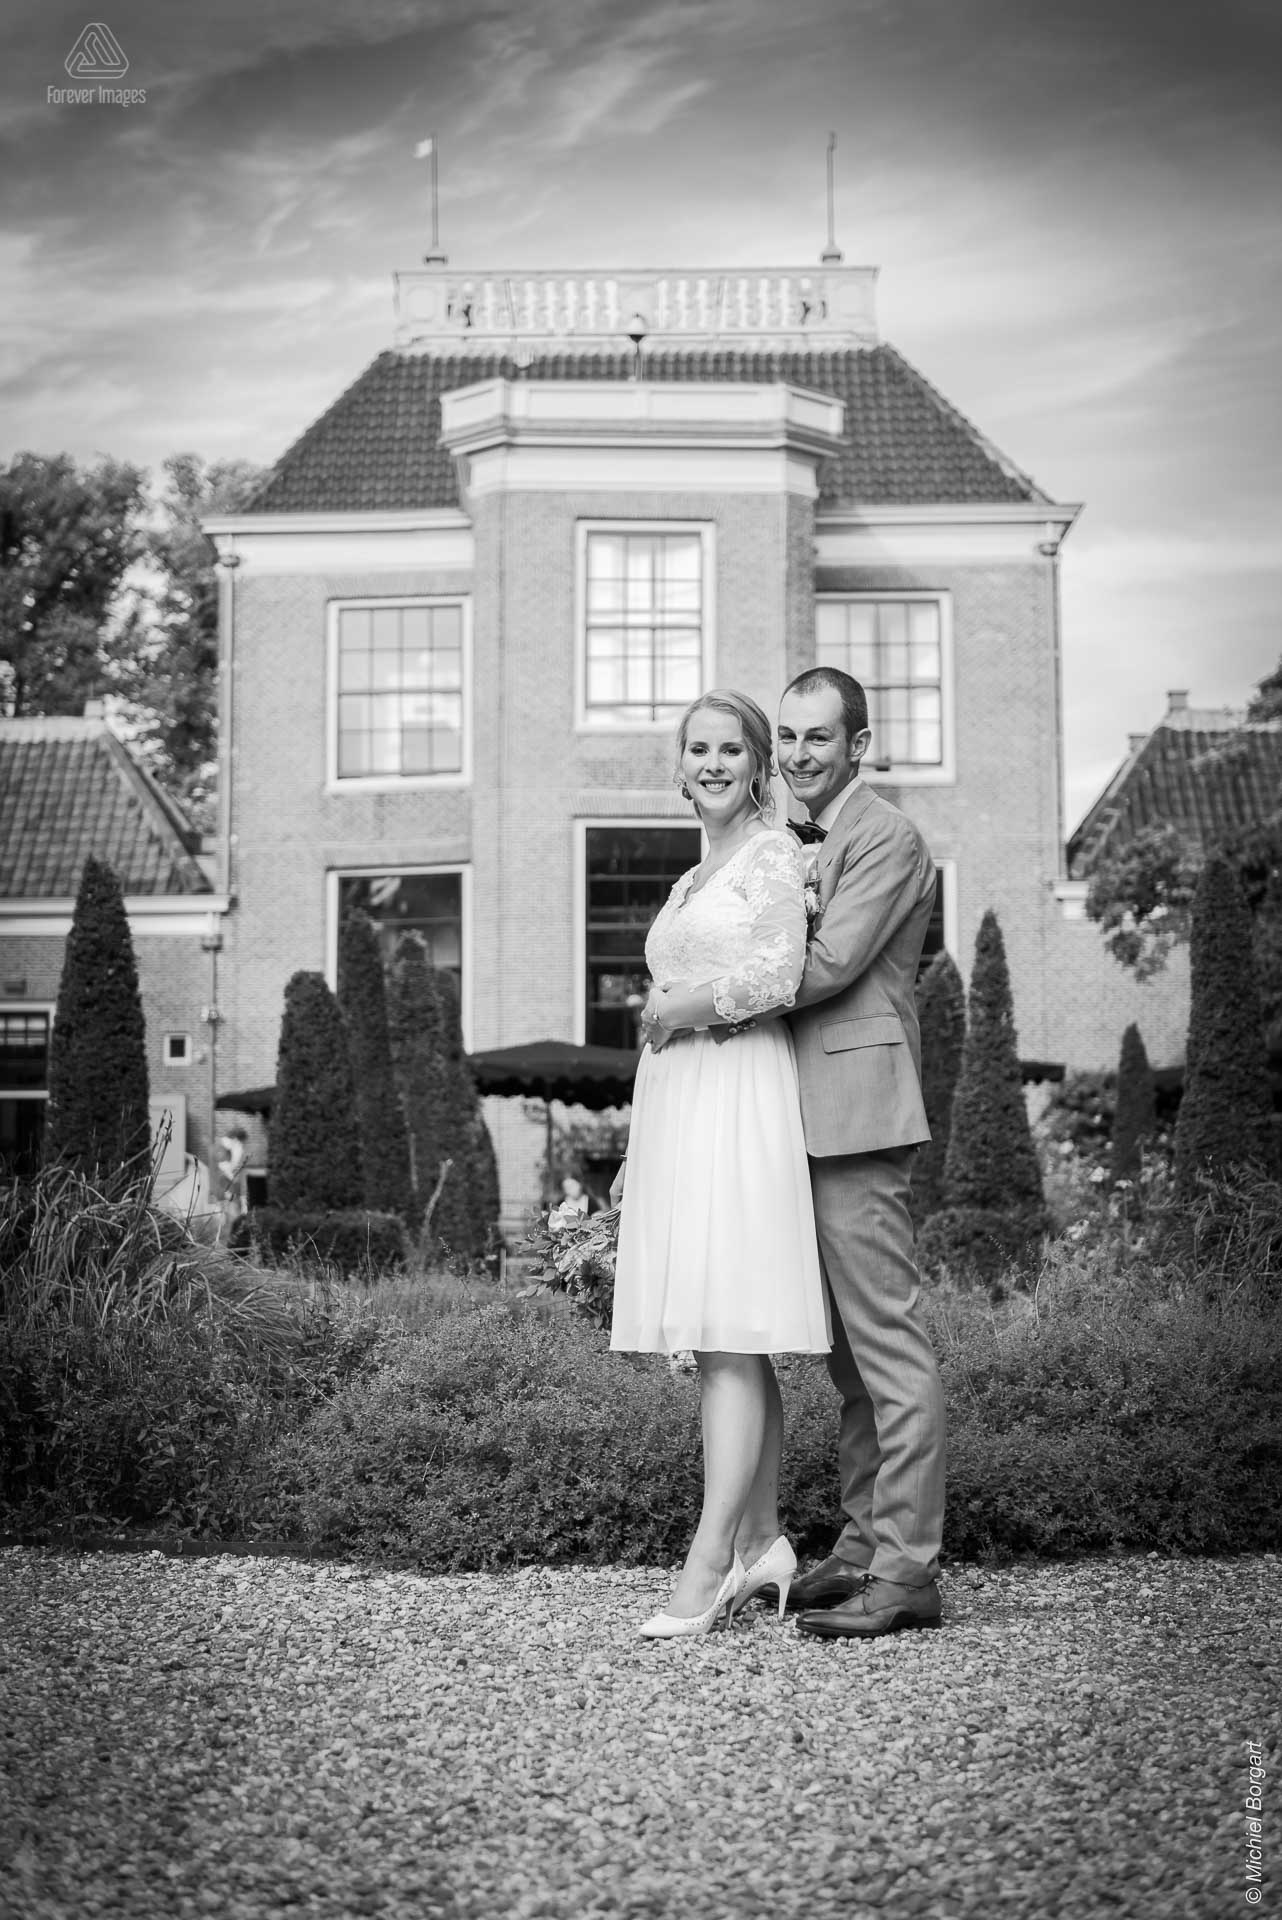 Bridal photo black and white B&W wedding couple garden Huize Frankendael Amsterdam | Bart Eefje | Wedding Photographer Michiel Borgart - Forever Images.